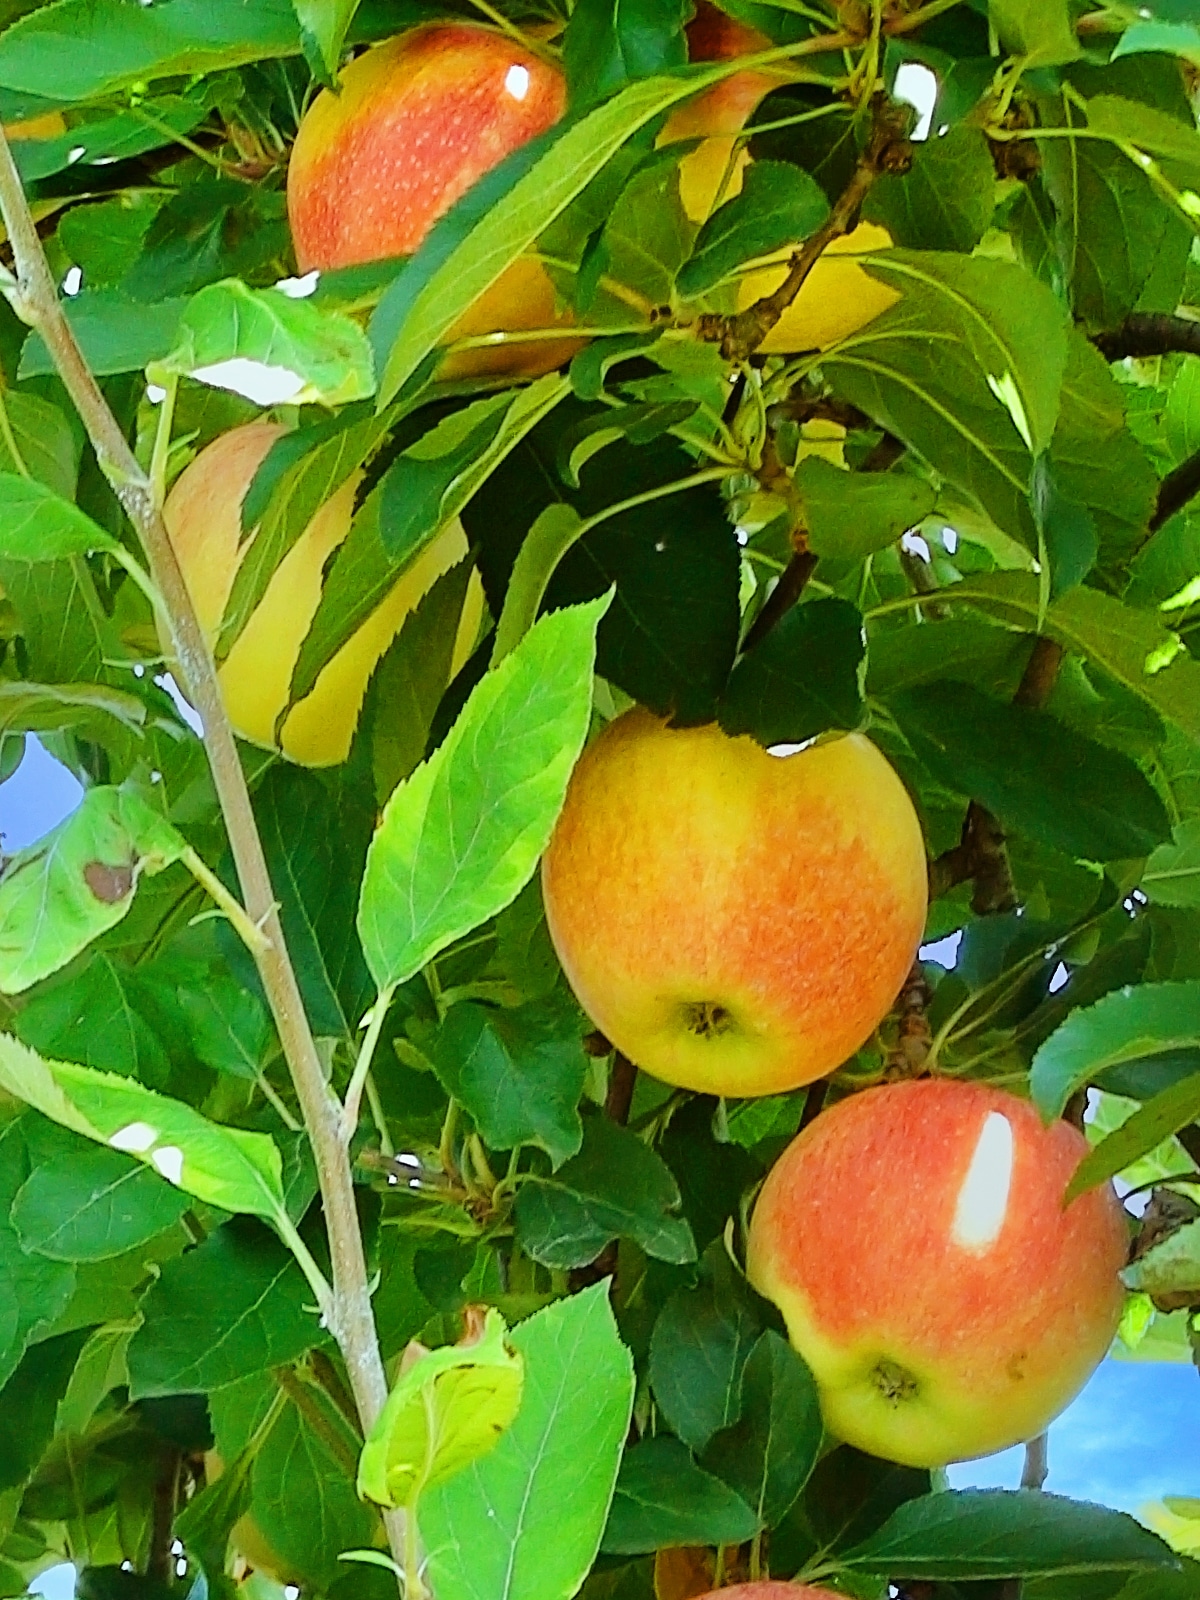 Gala Apple Tree  Grow Organic Apples At Home - PlantingTree